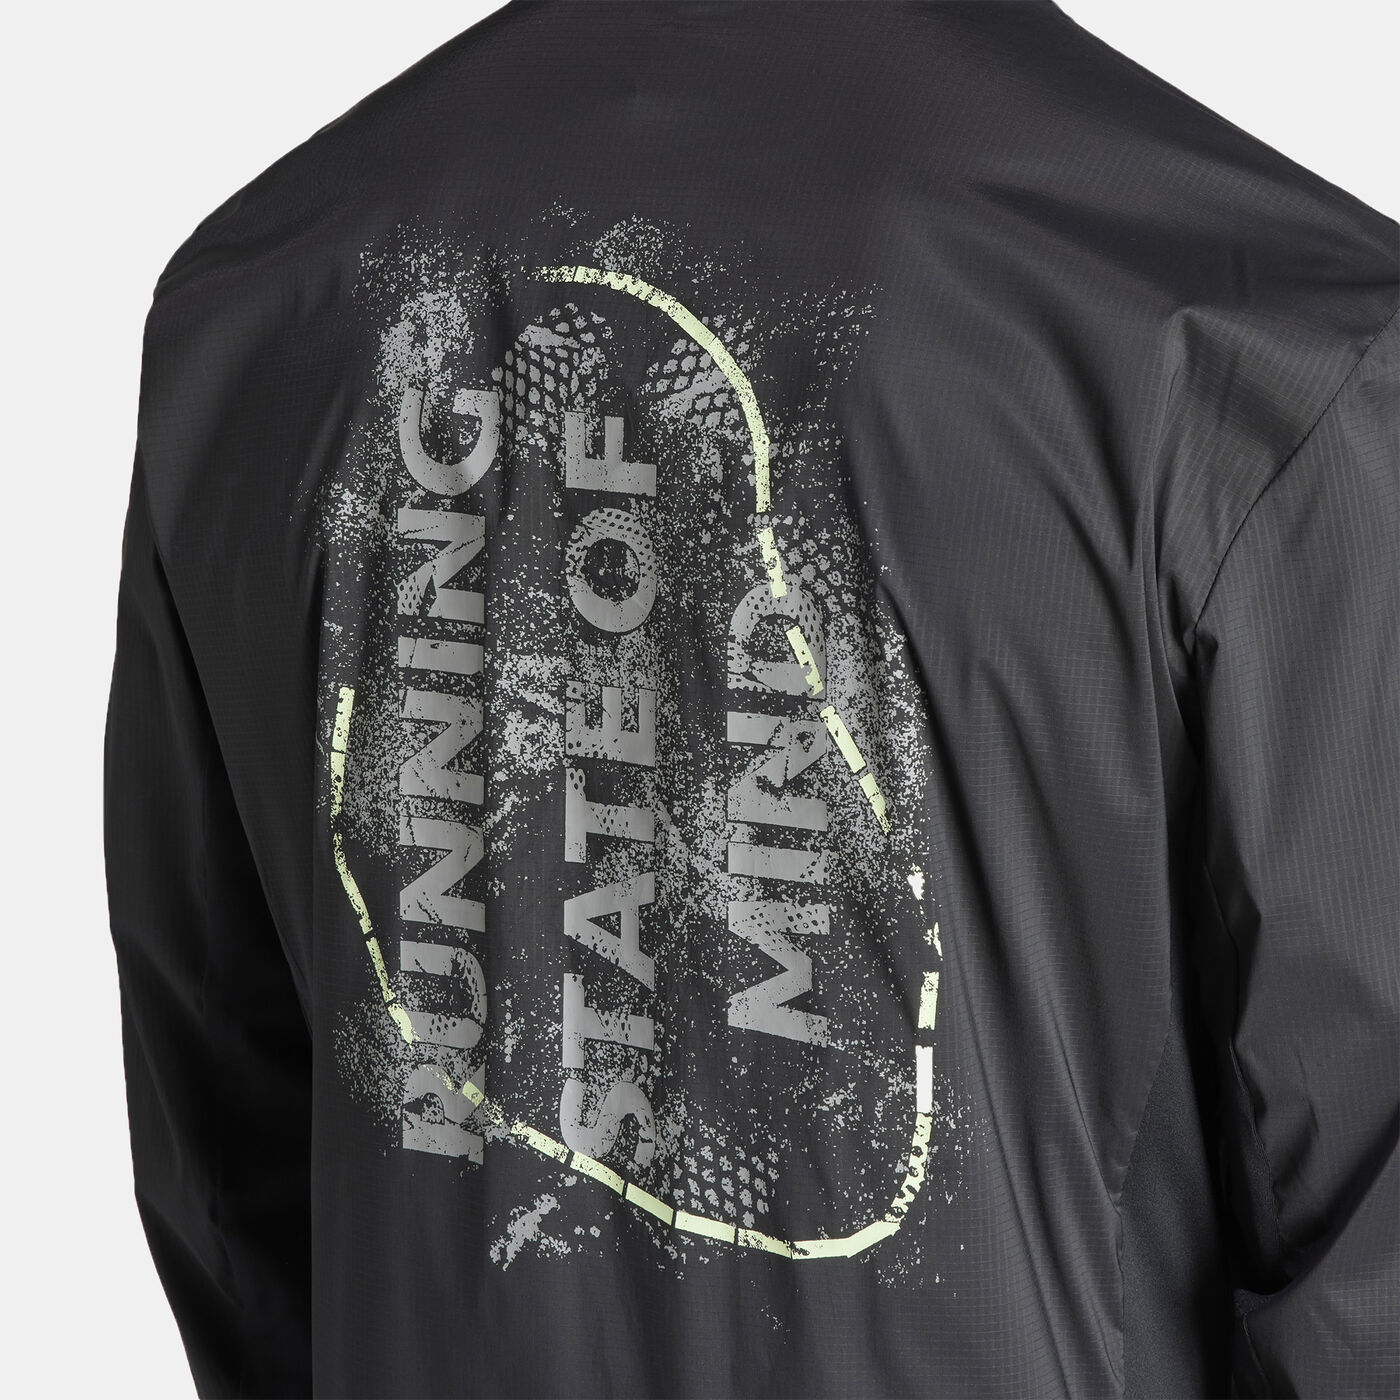 Men's Ultimateadi Printed Running Jacket